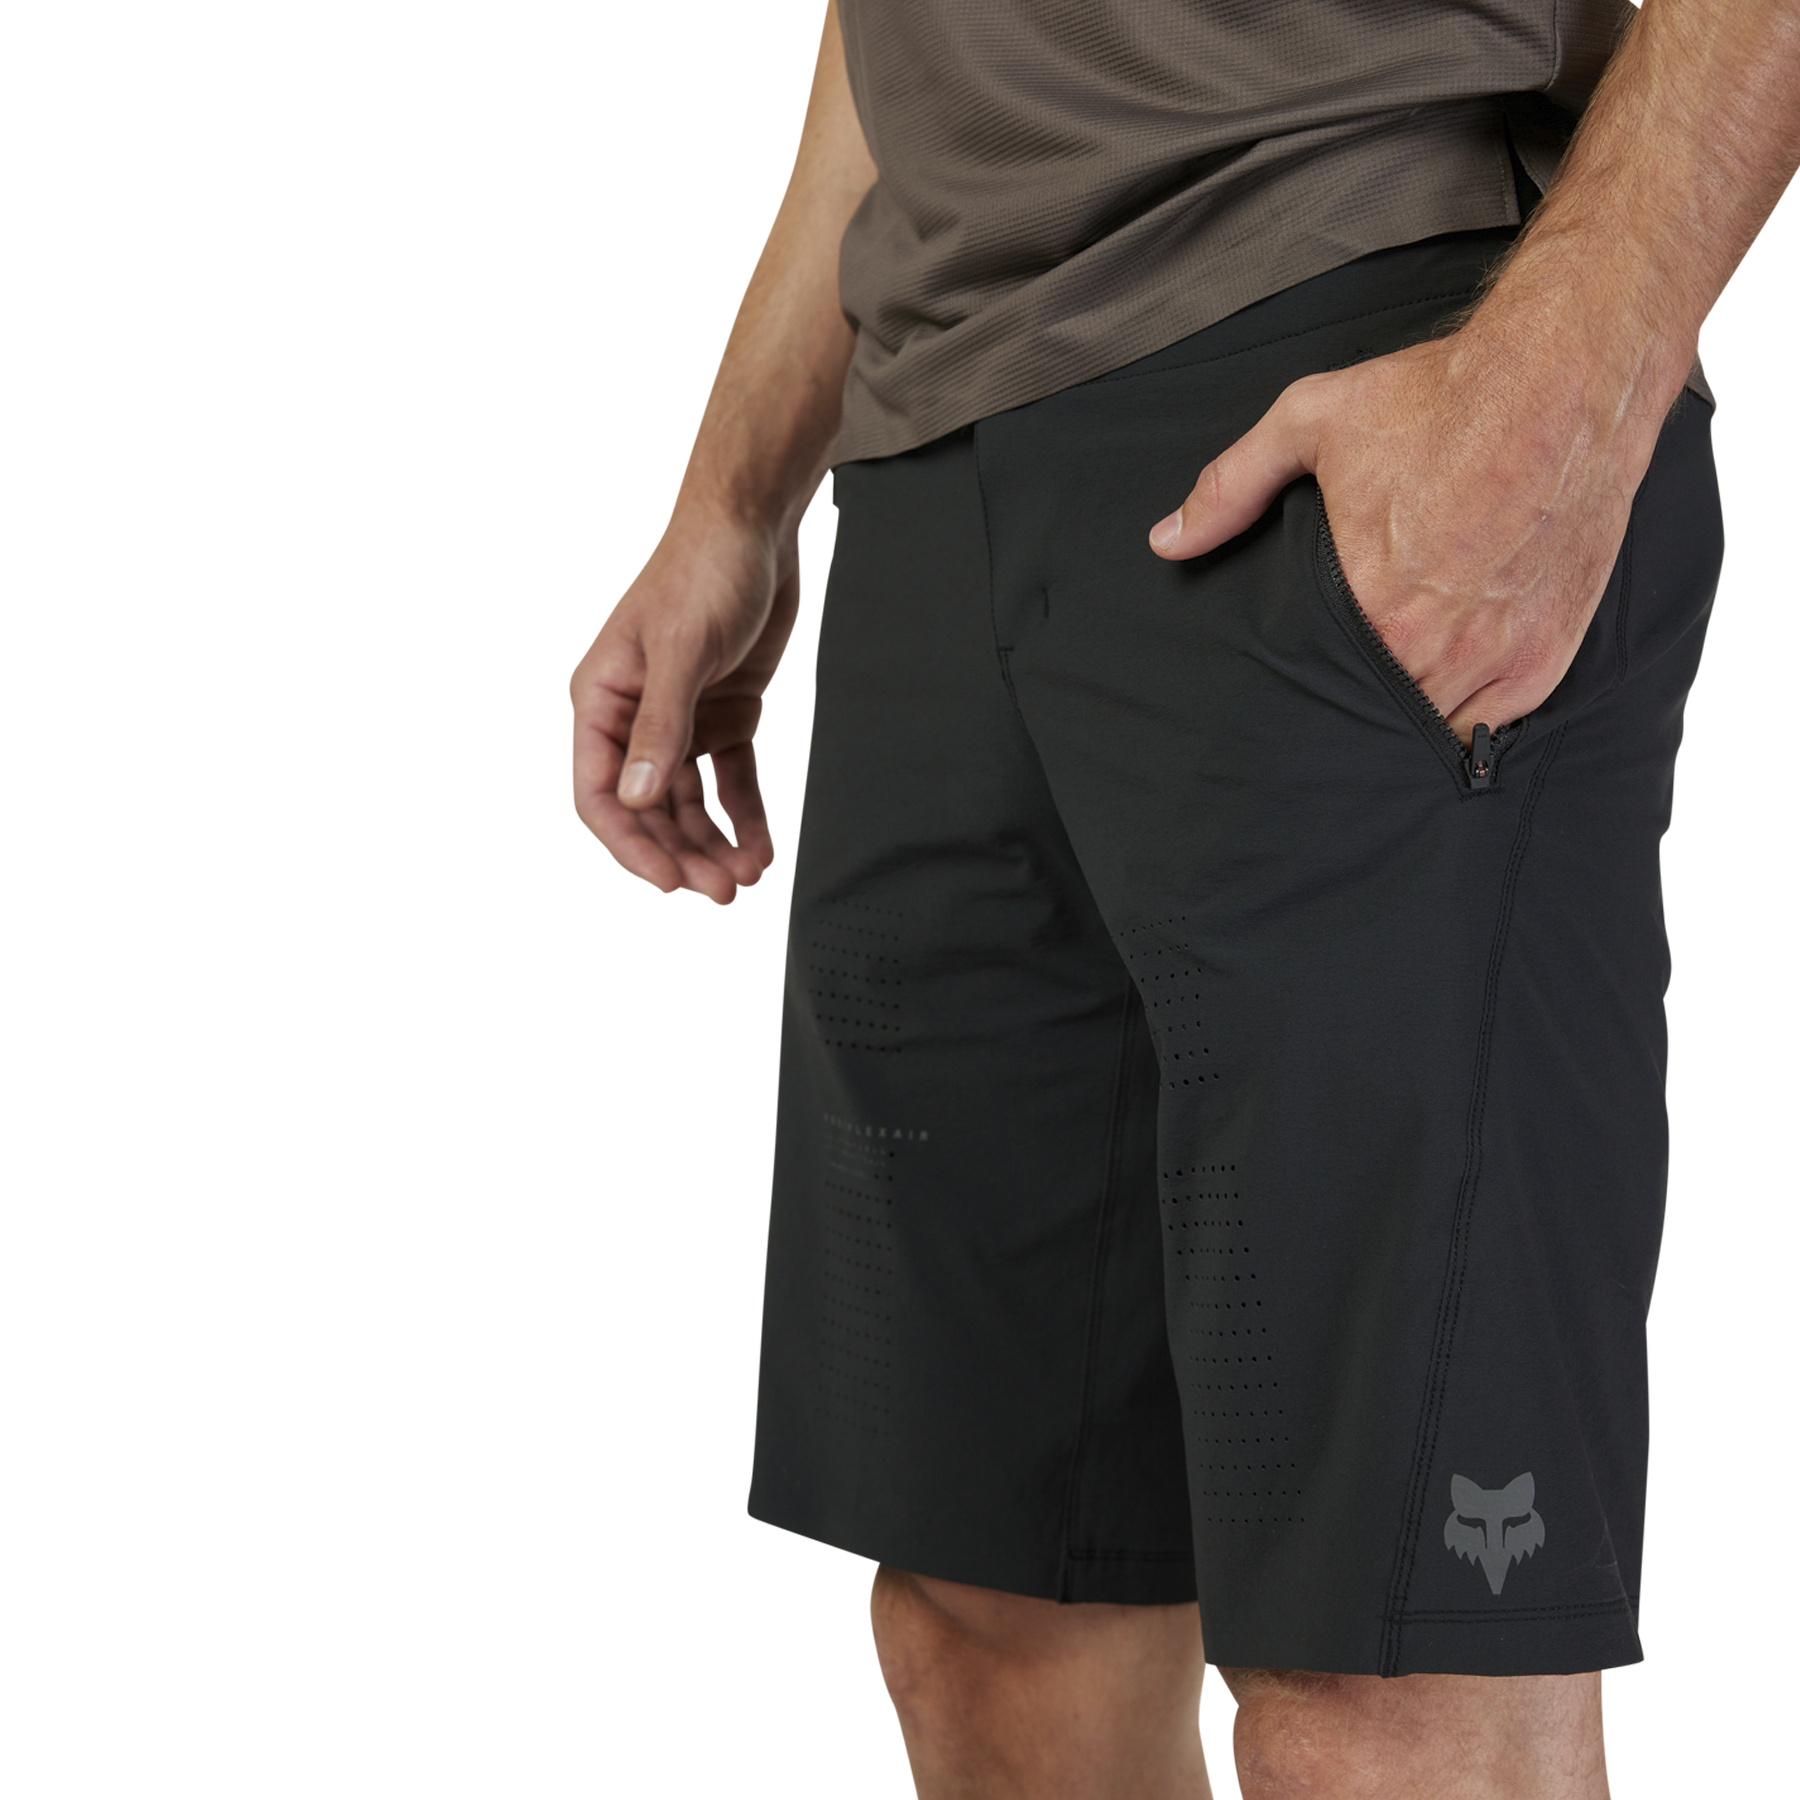 Fox Flexair Shorts With Liner - 2XL-38 - Black - Image 6